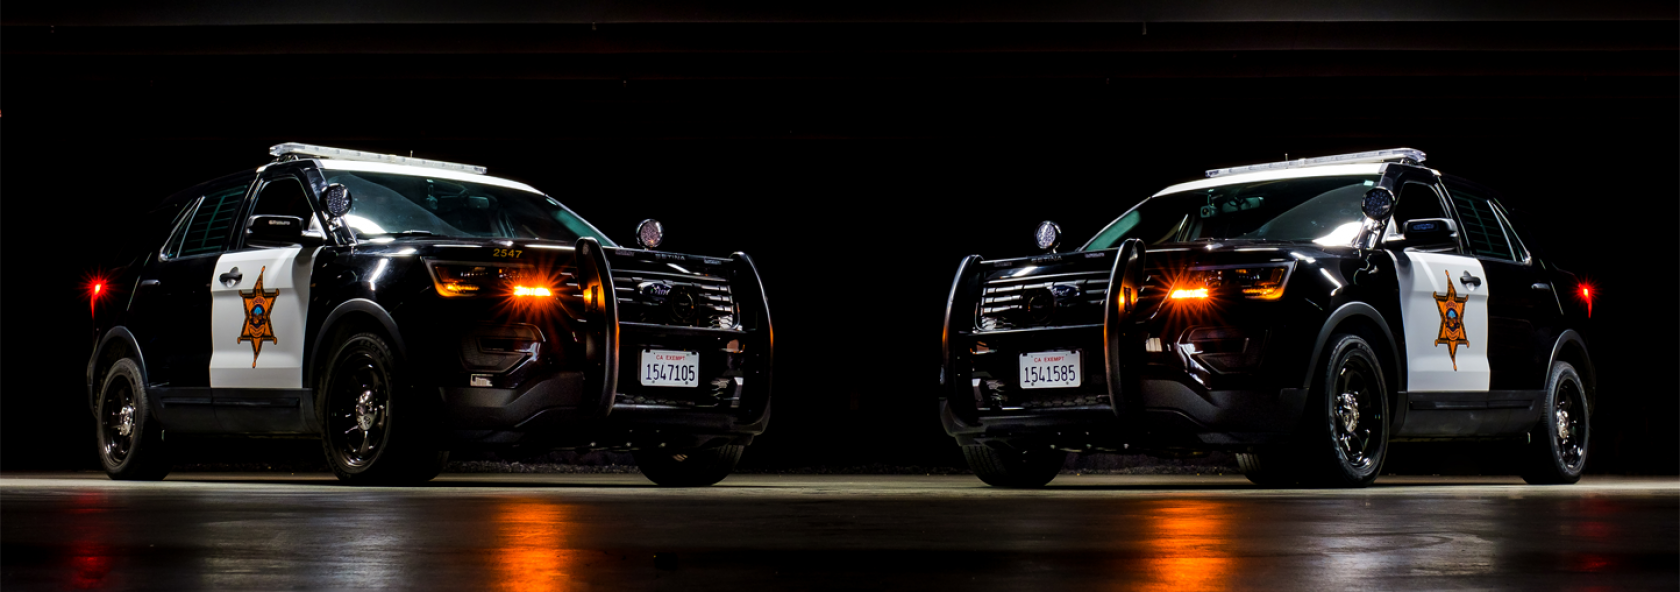 Two Sheriff patrol SUV's on black background